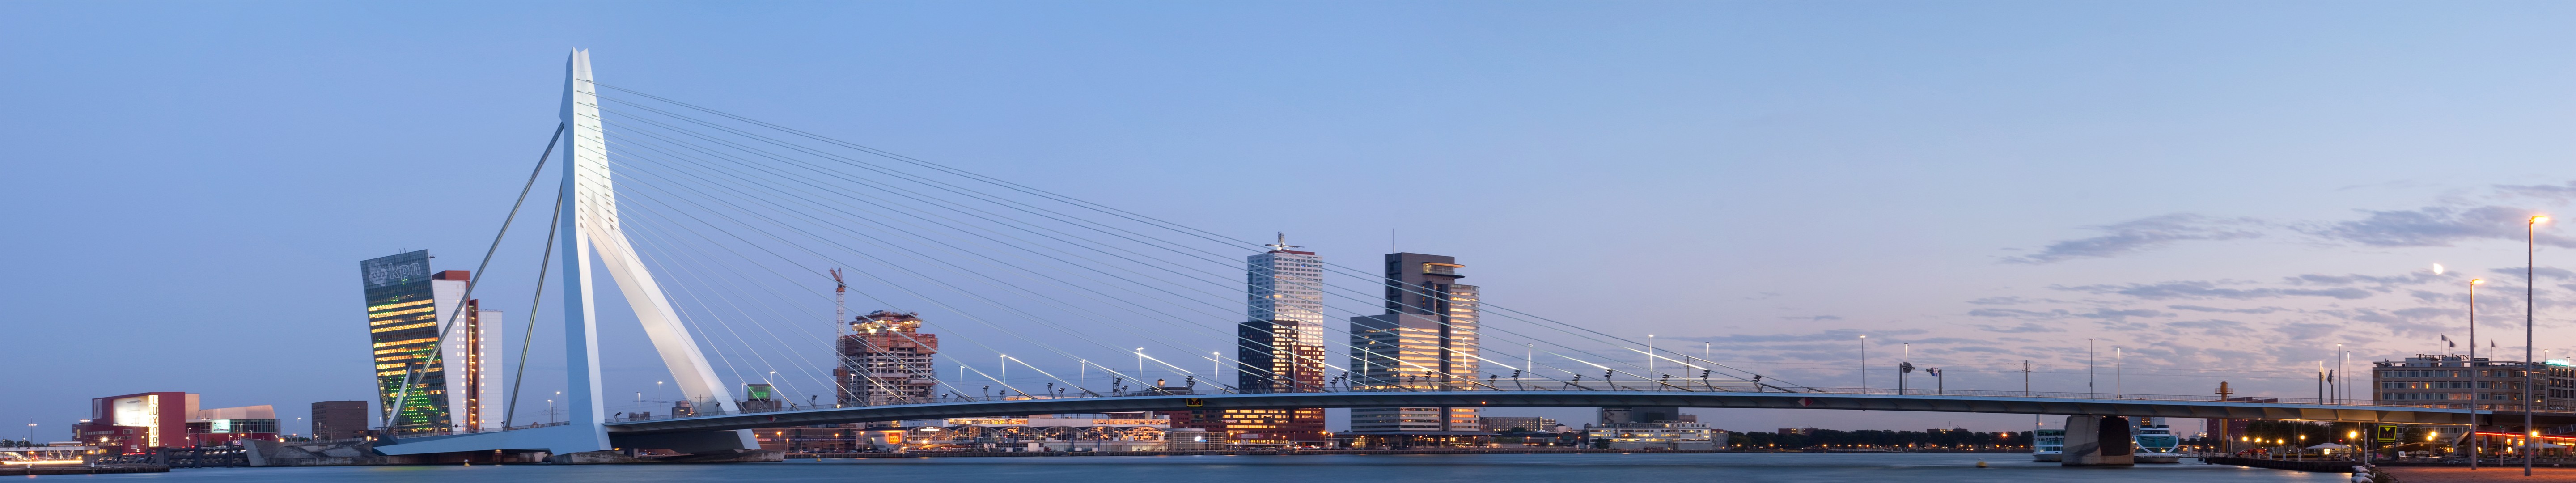 General 5760x1080 panorama cityscape bridge multiple display Netherlands Rotterdam Erasmusbrug